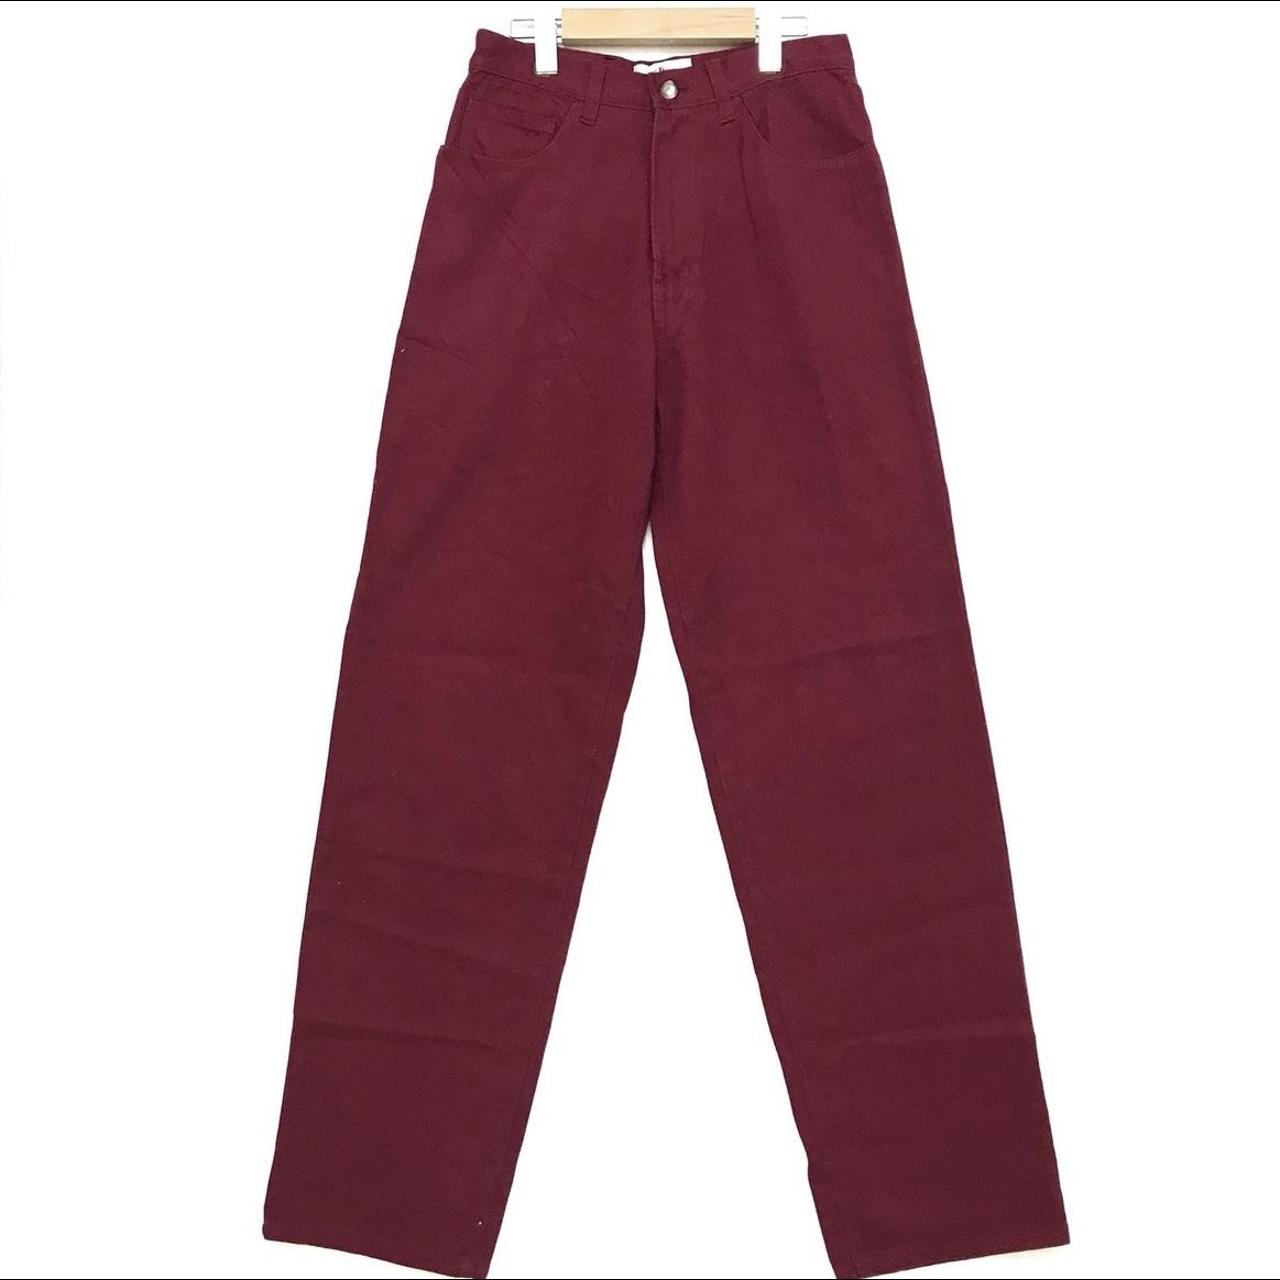 Kansai Yamamoto Men's Red and Burgundy Jeans (4)